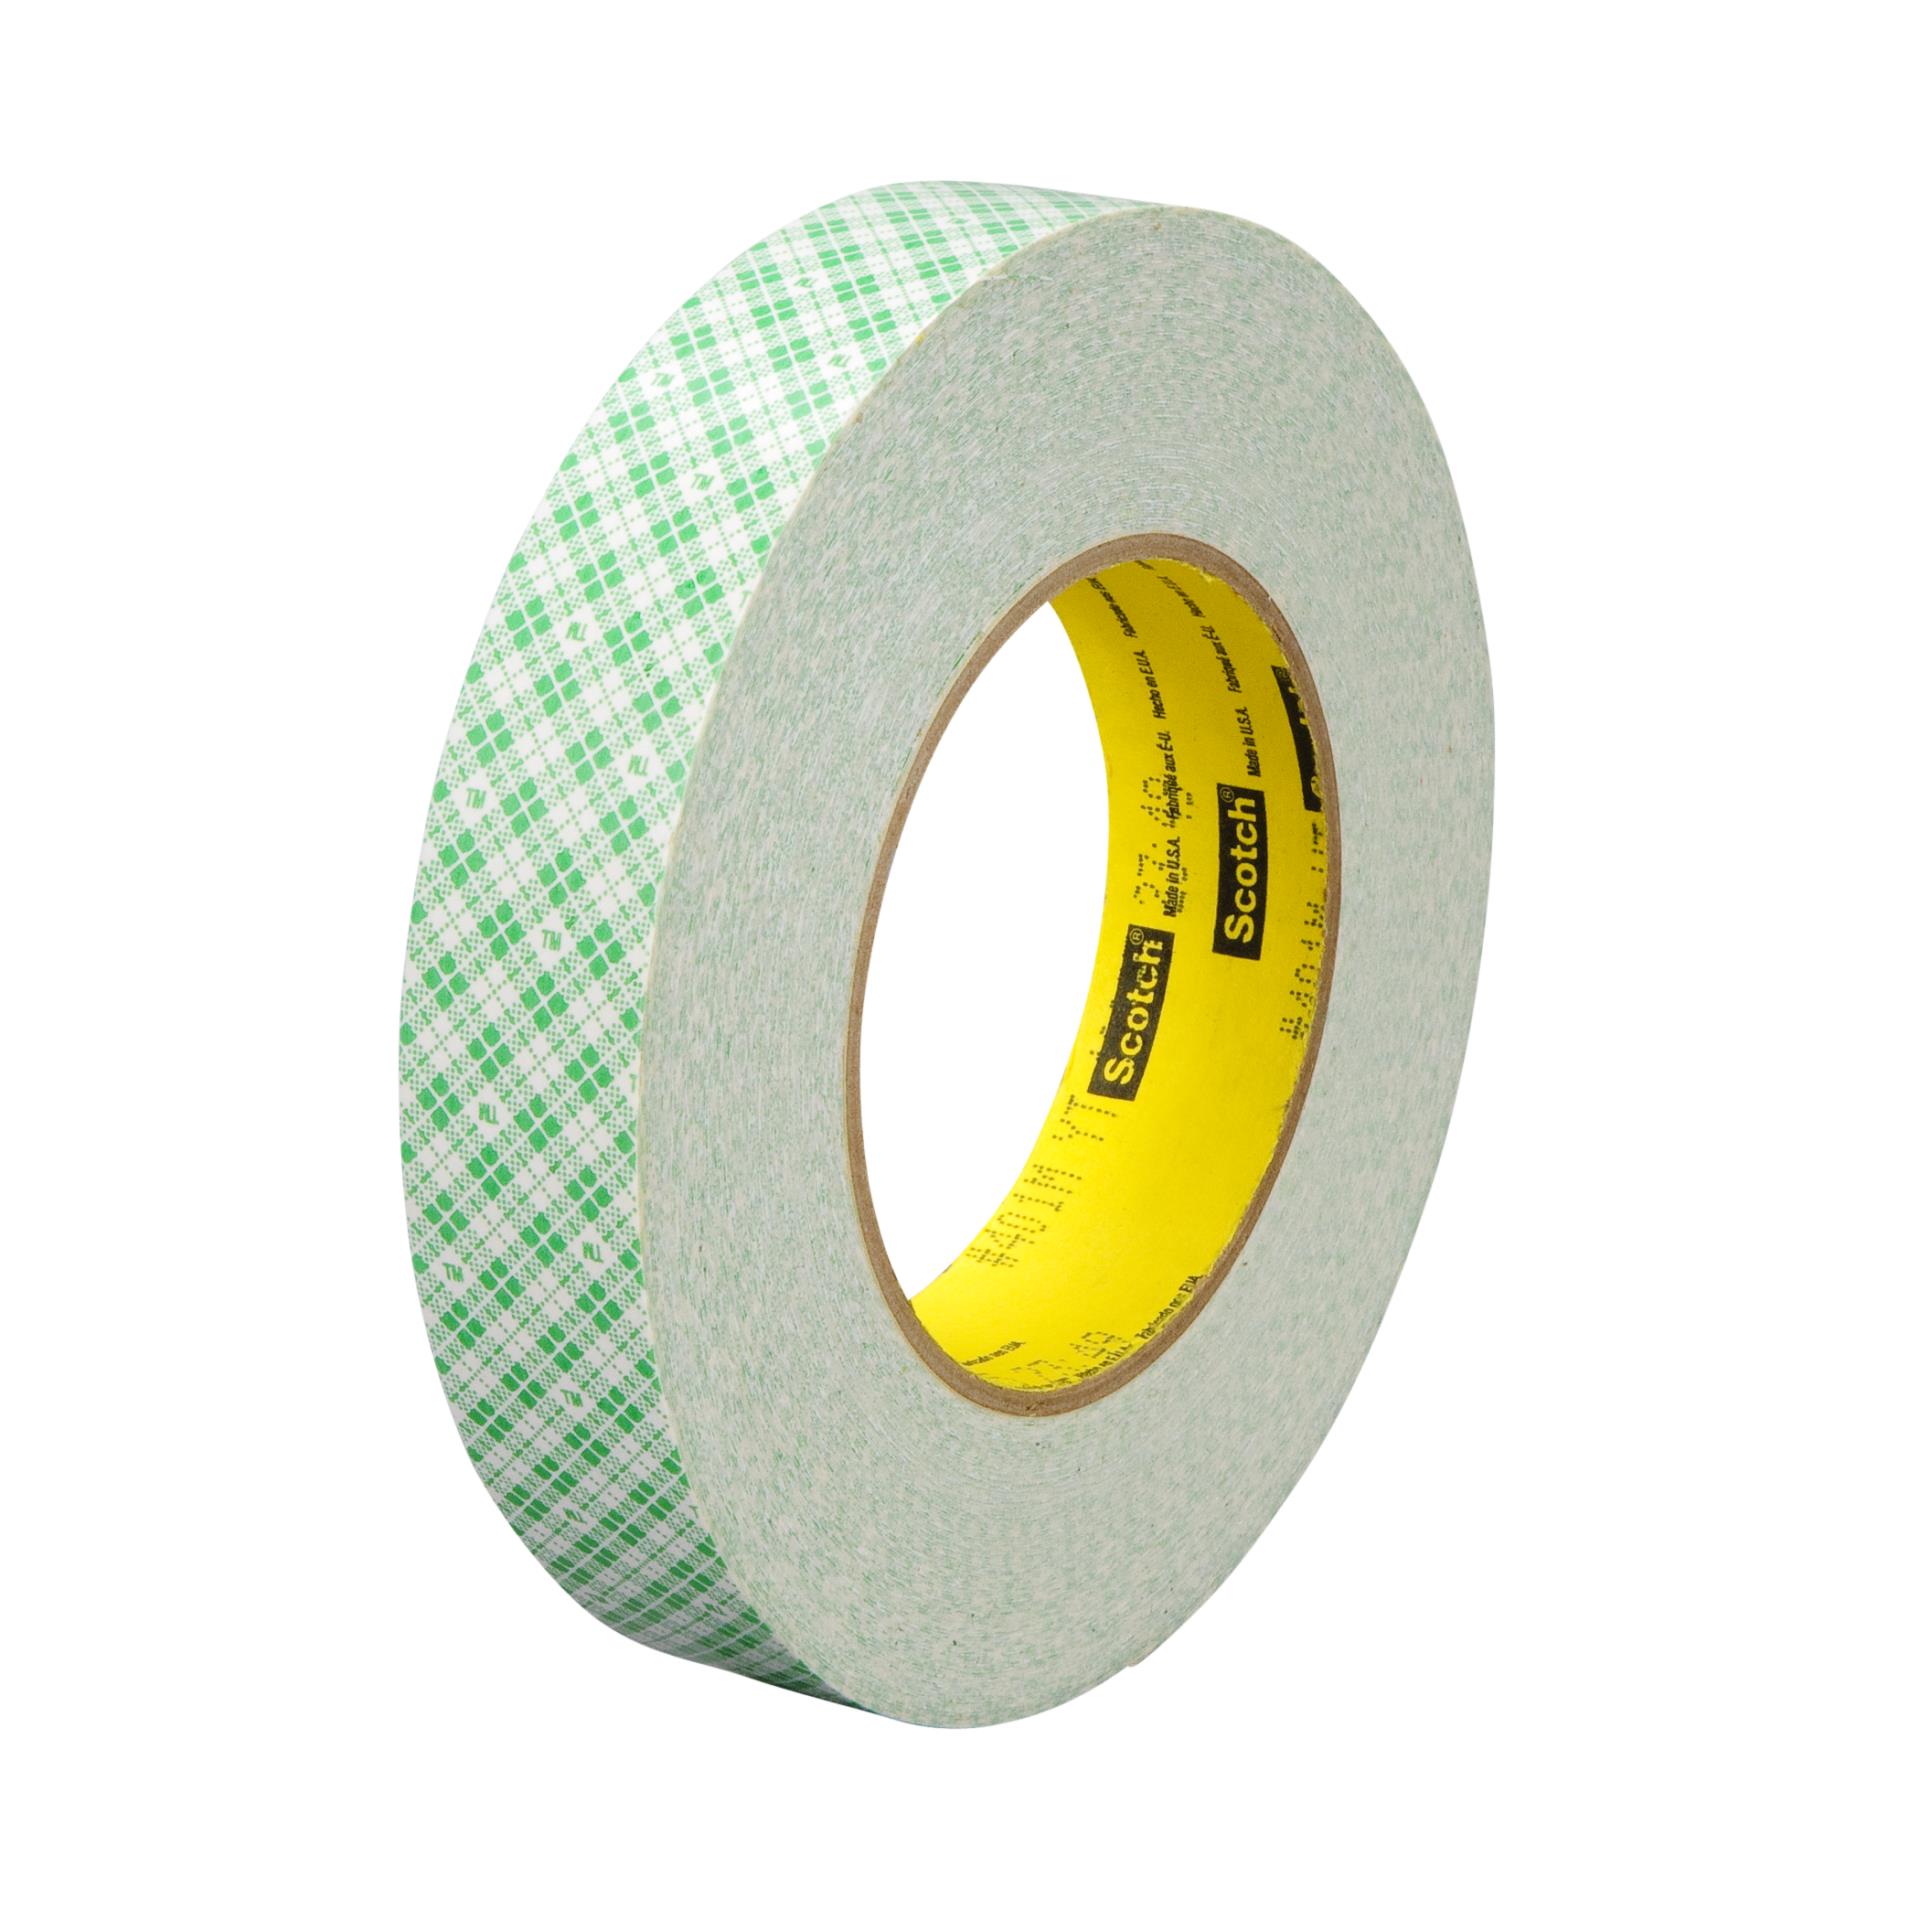 Pack-n-Tape  3M 94 Tape Primer Clear light yellow, 5 Gallon Pail, 1 per  case Bulk - Pack-n-Tape